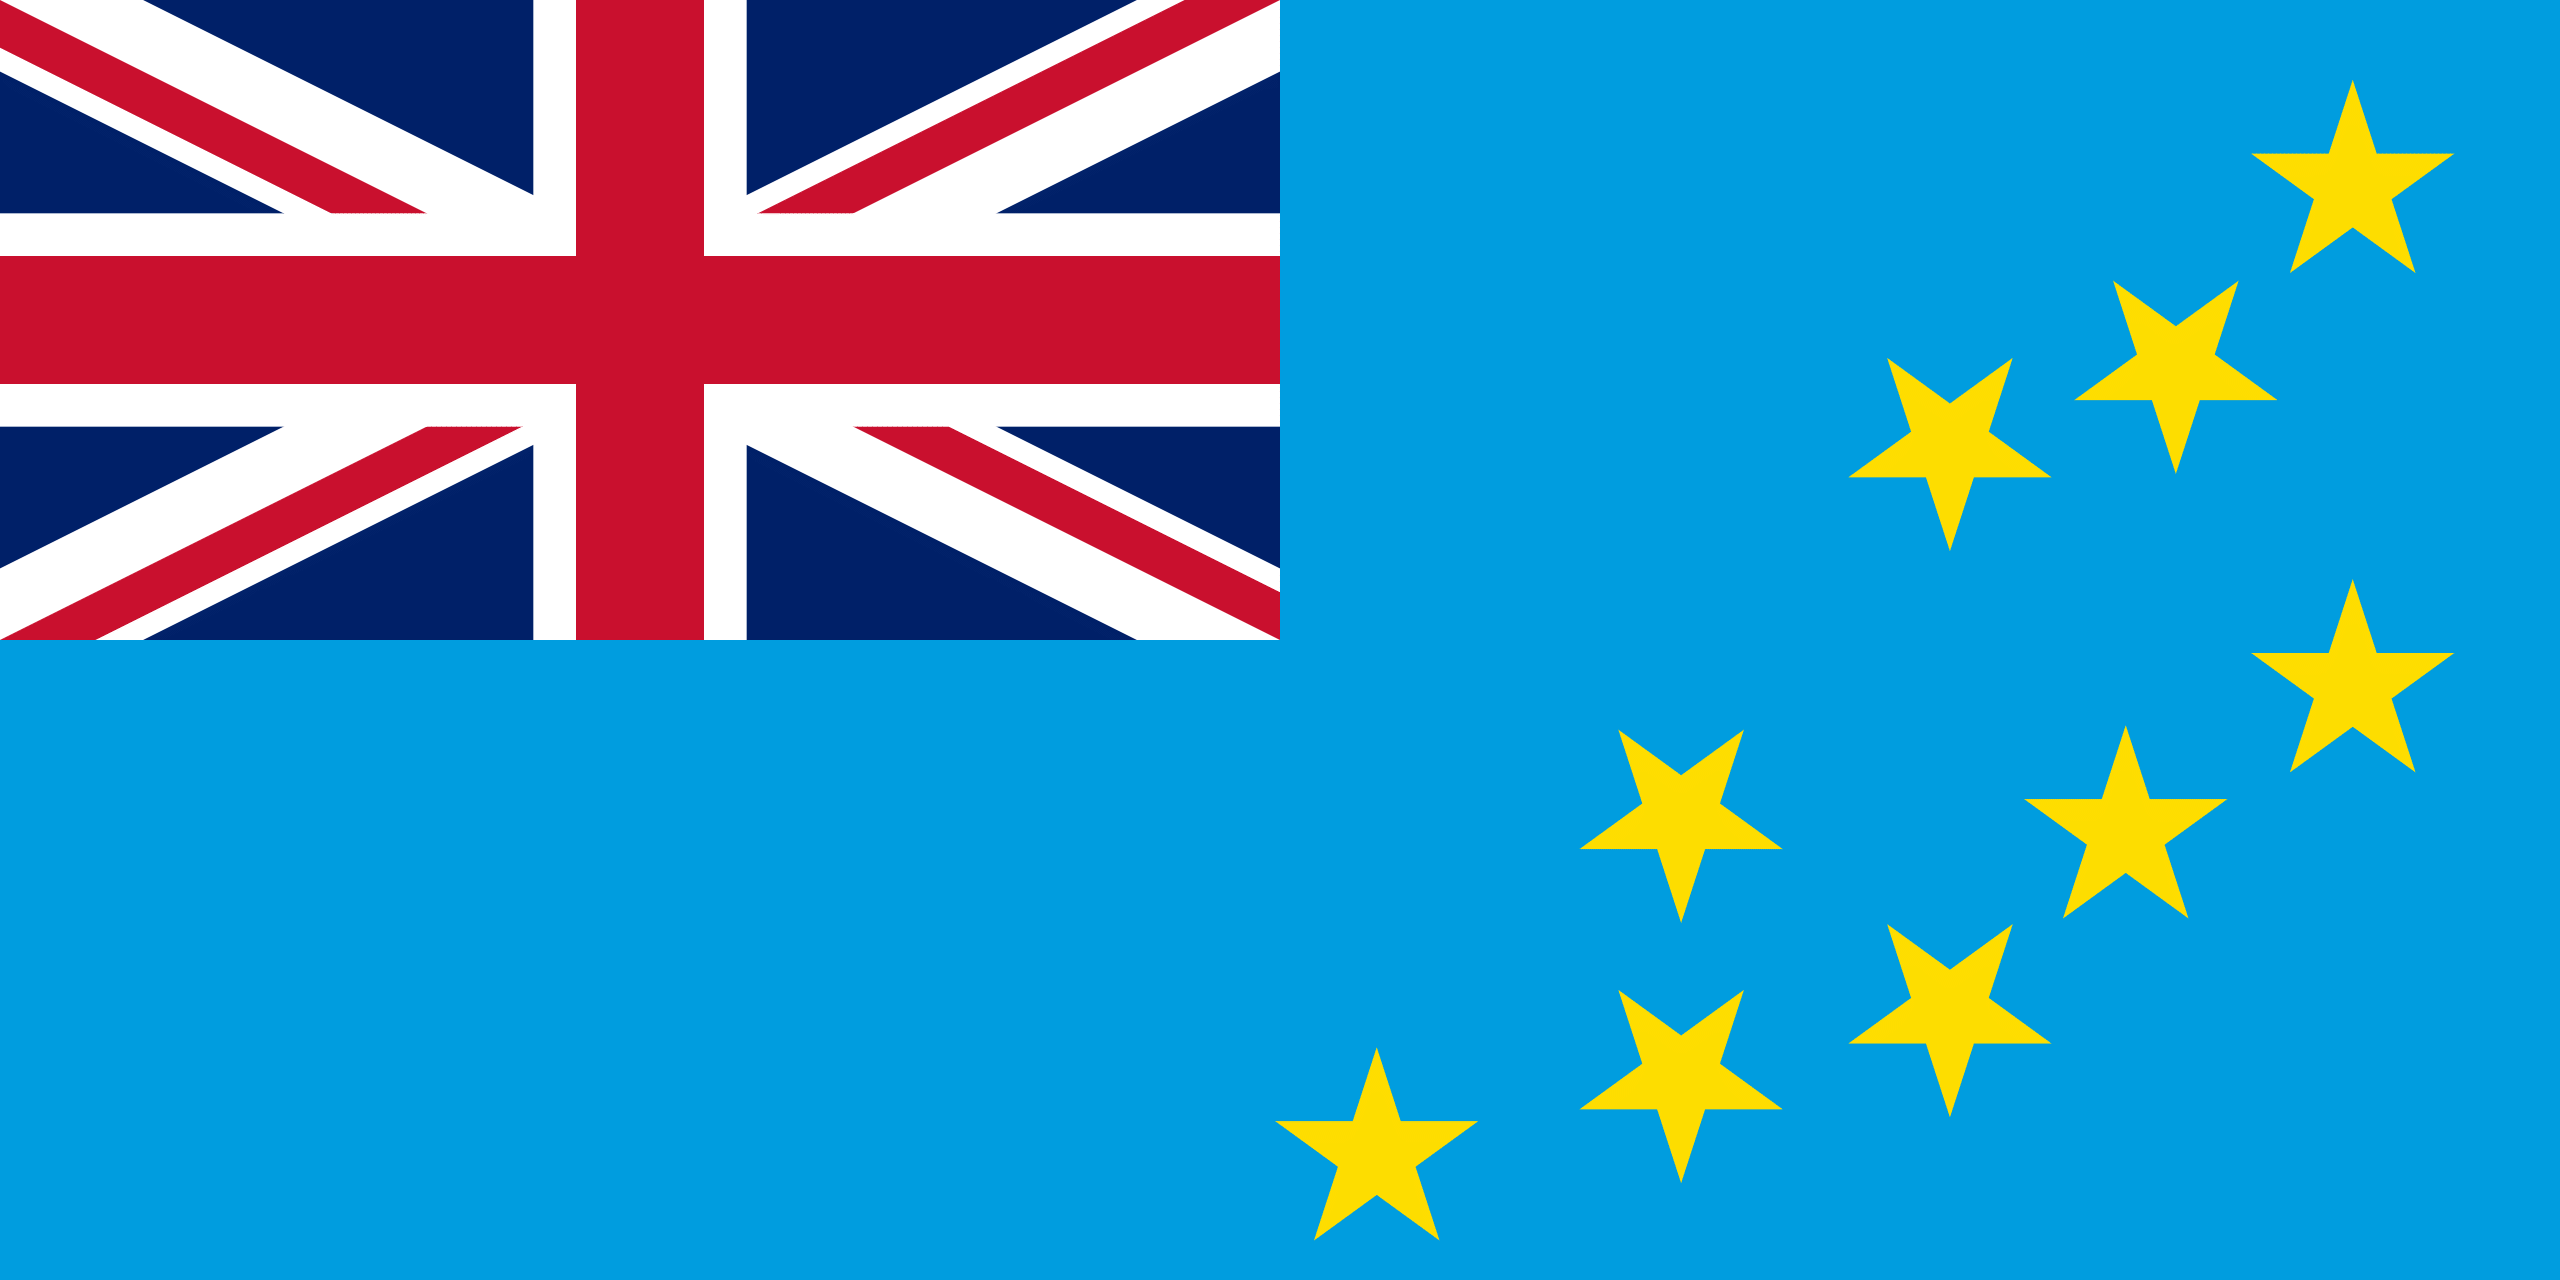 Tuvaluas flag